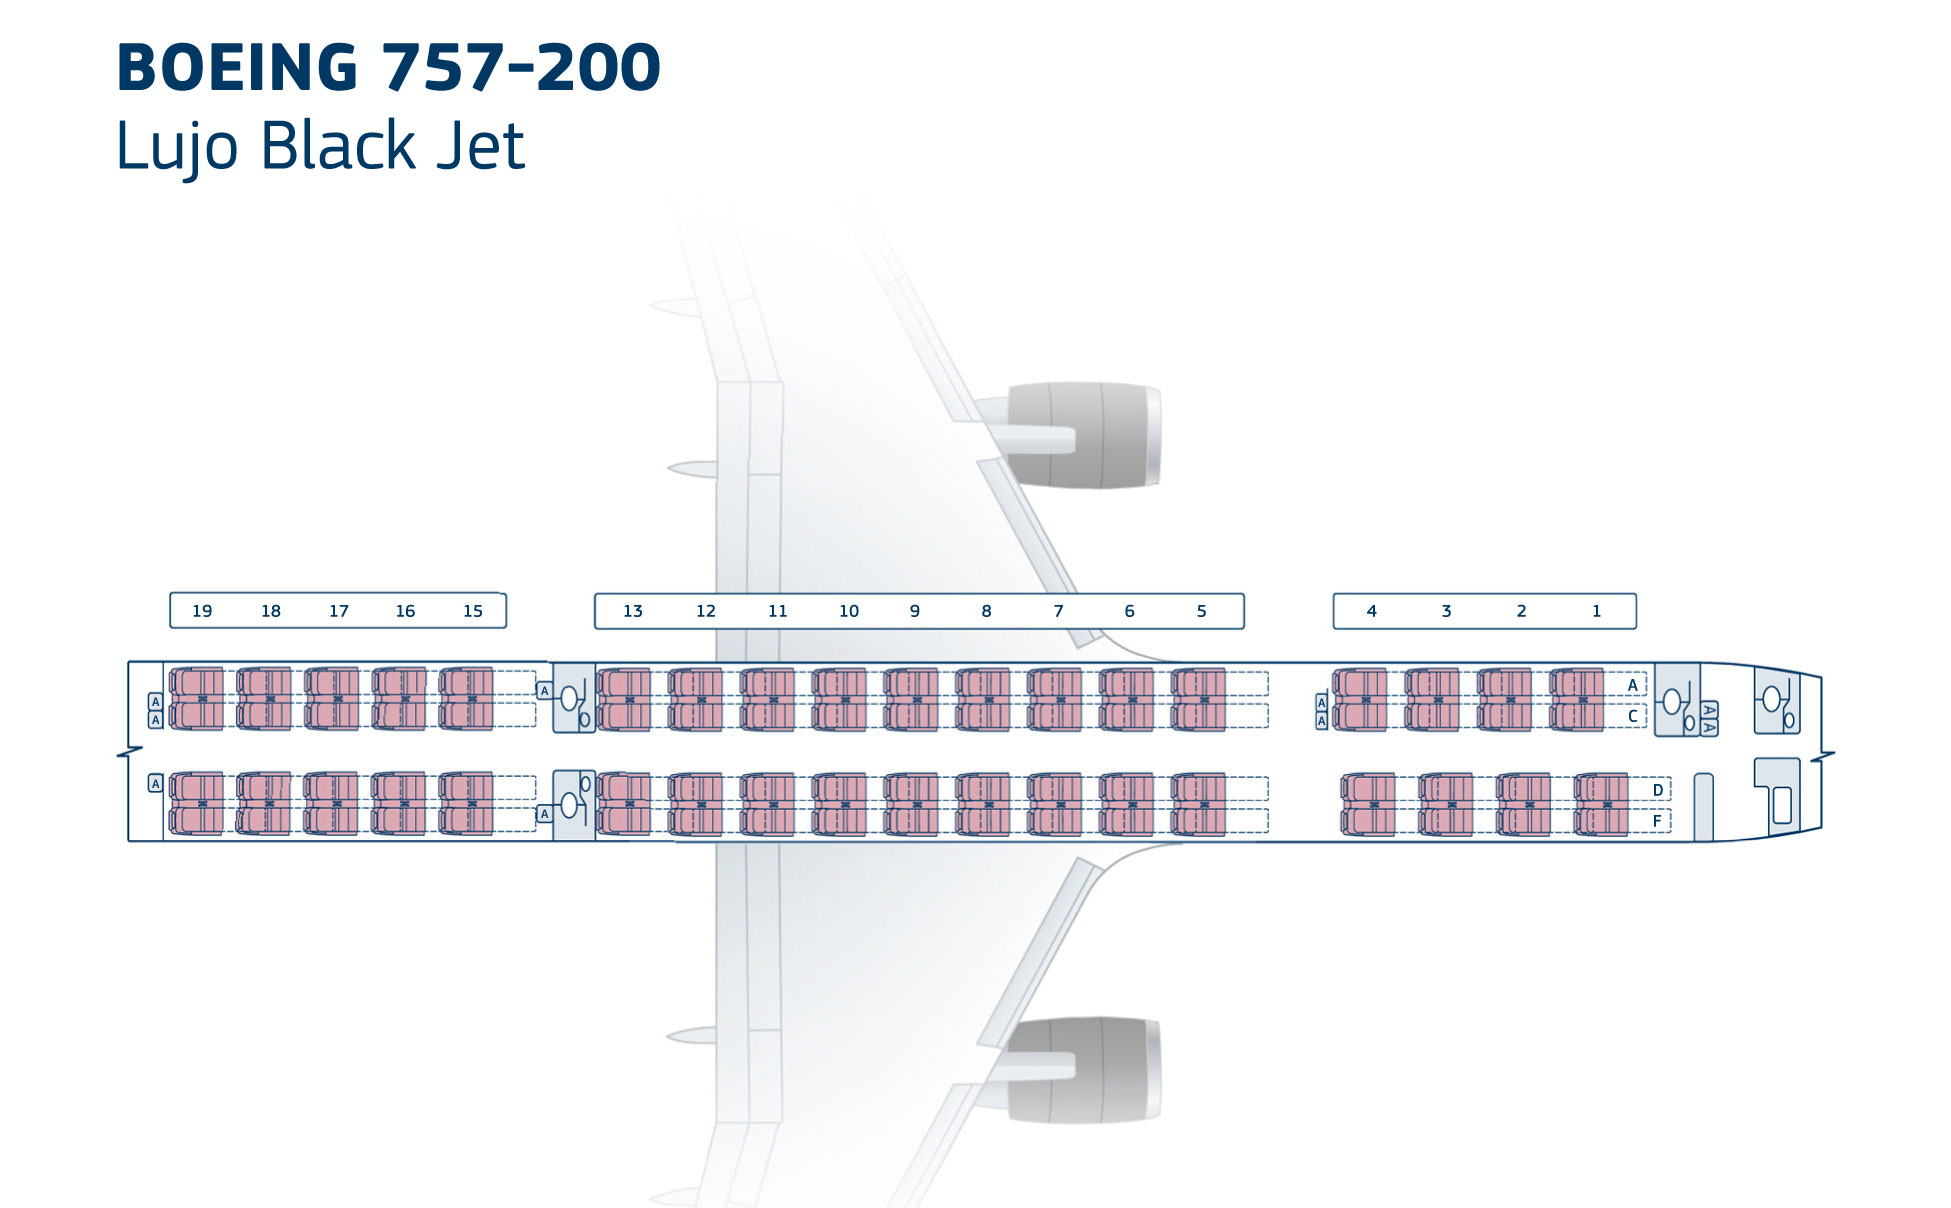 ООО «АЗУР эйр», + Наш воздушный флот: Boeing 757-200 Black Jet